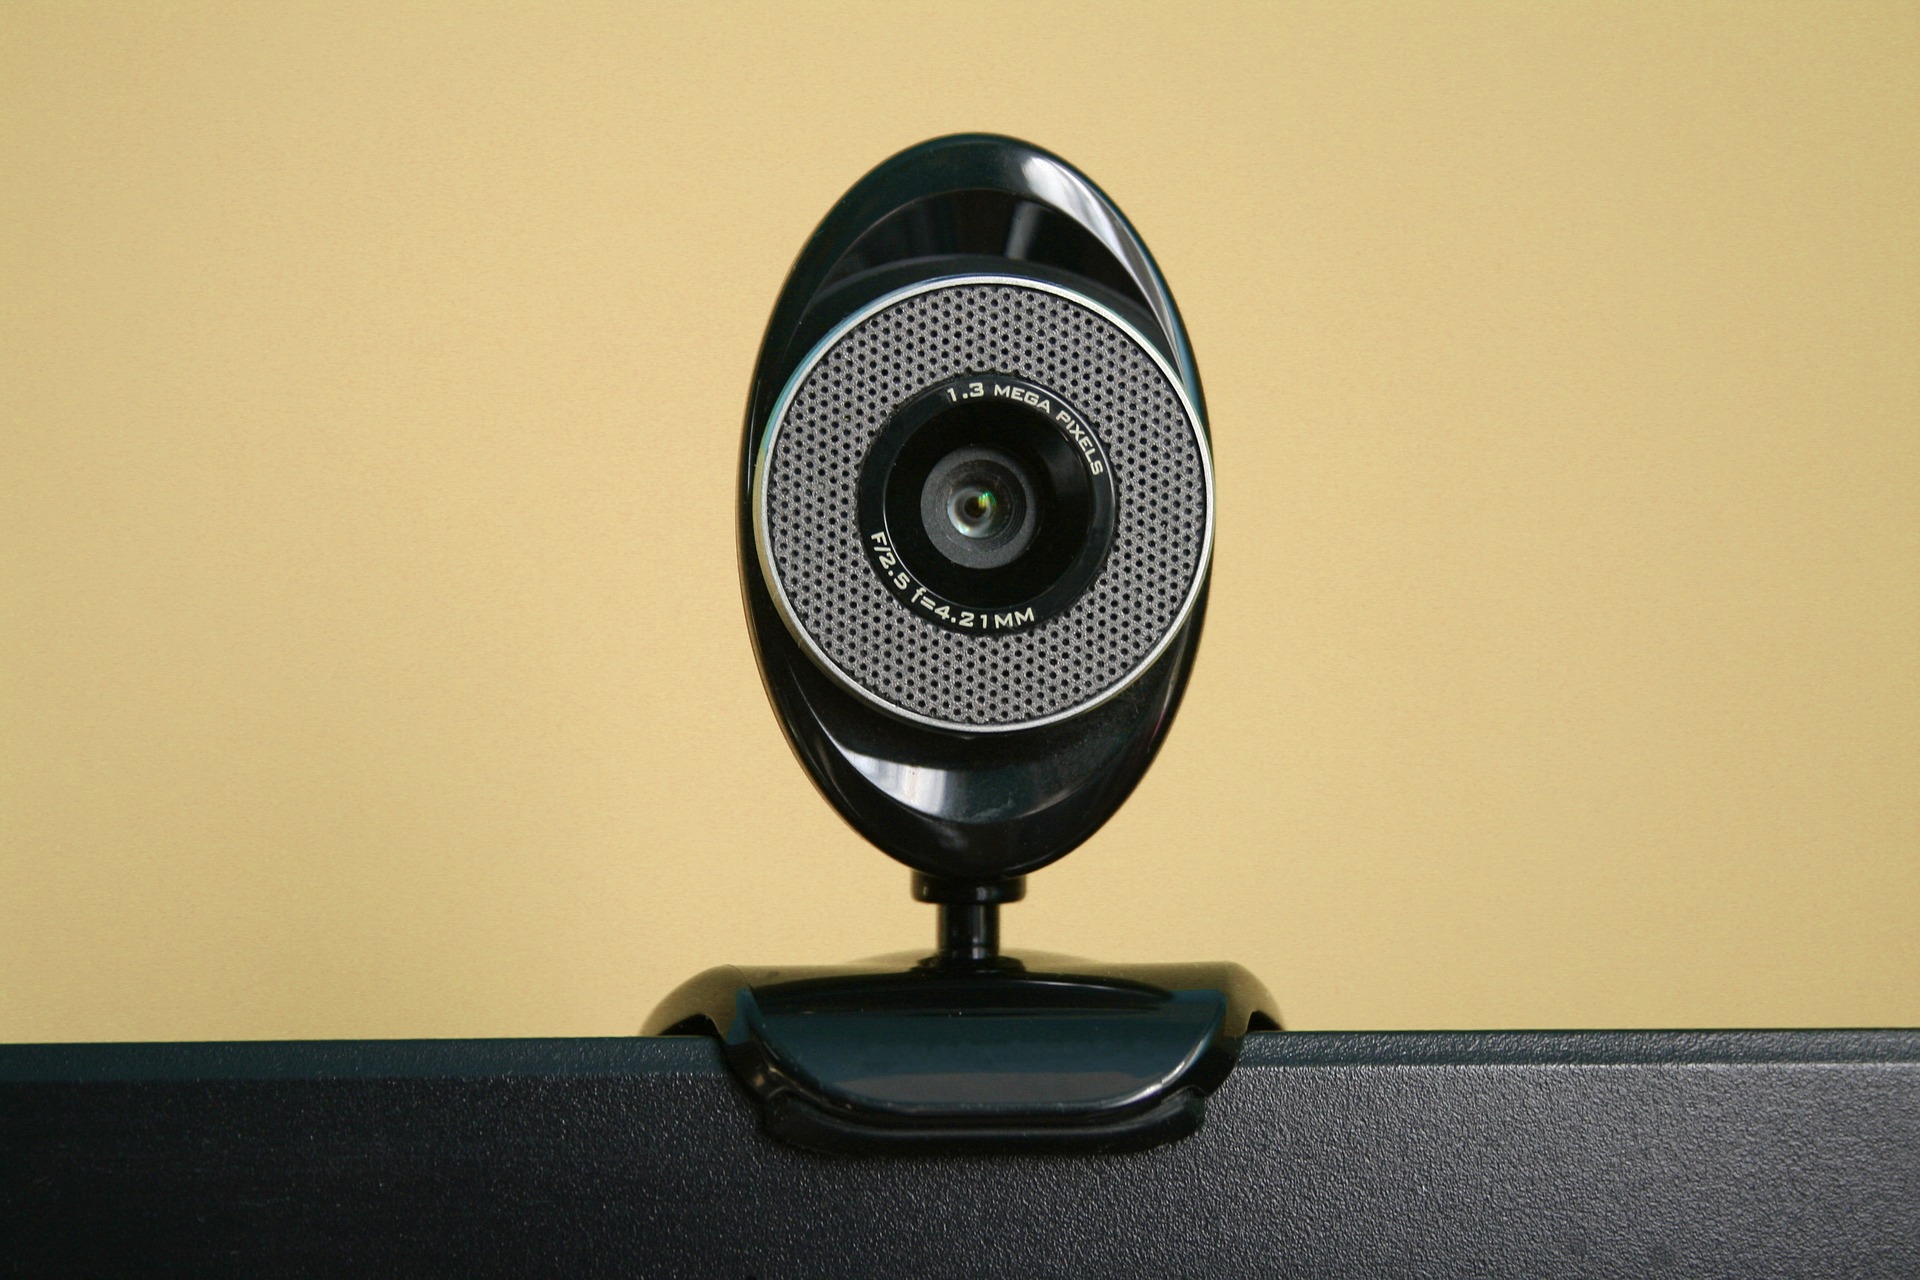 An oval shaped black web camera